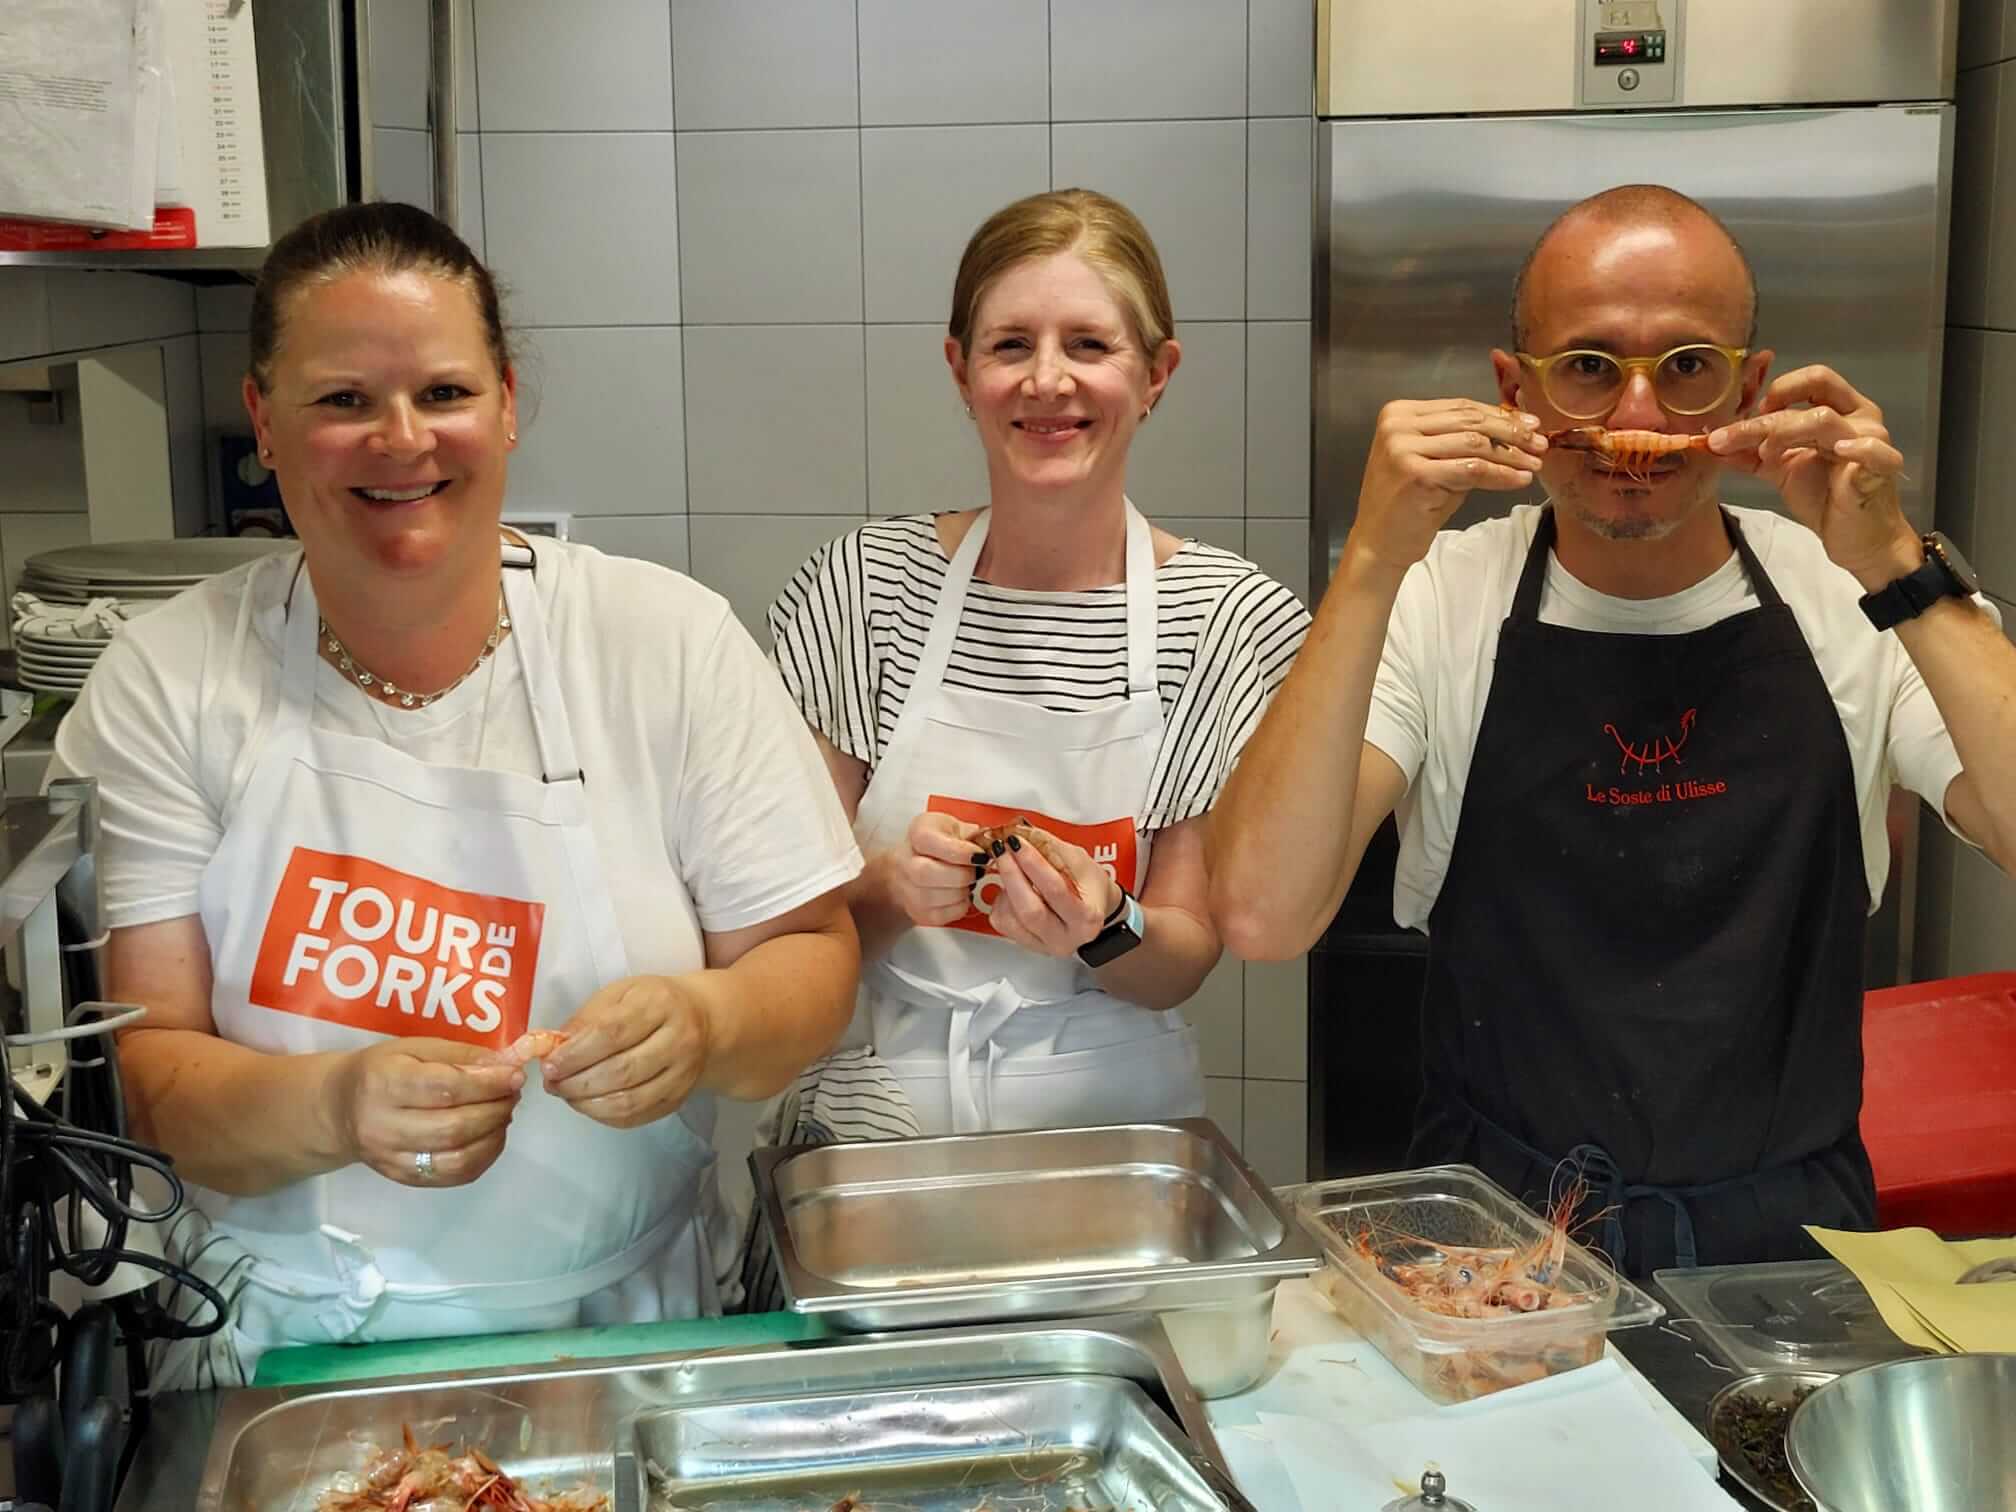 Lesbian-owned food travel company celebrates 20 years